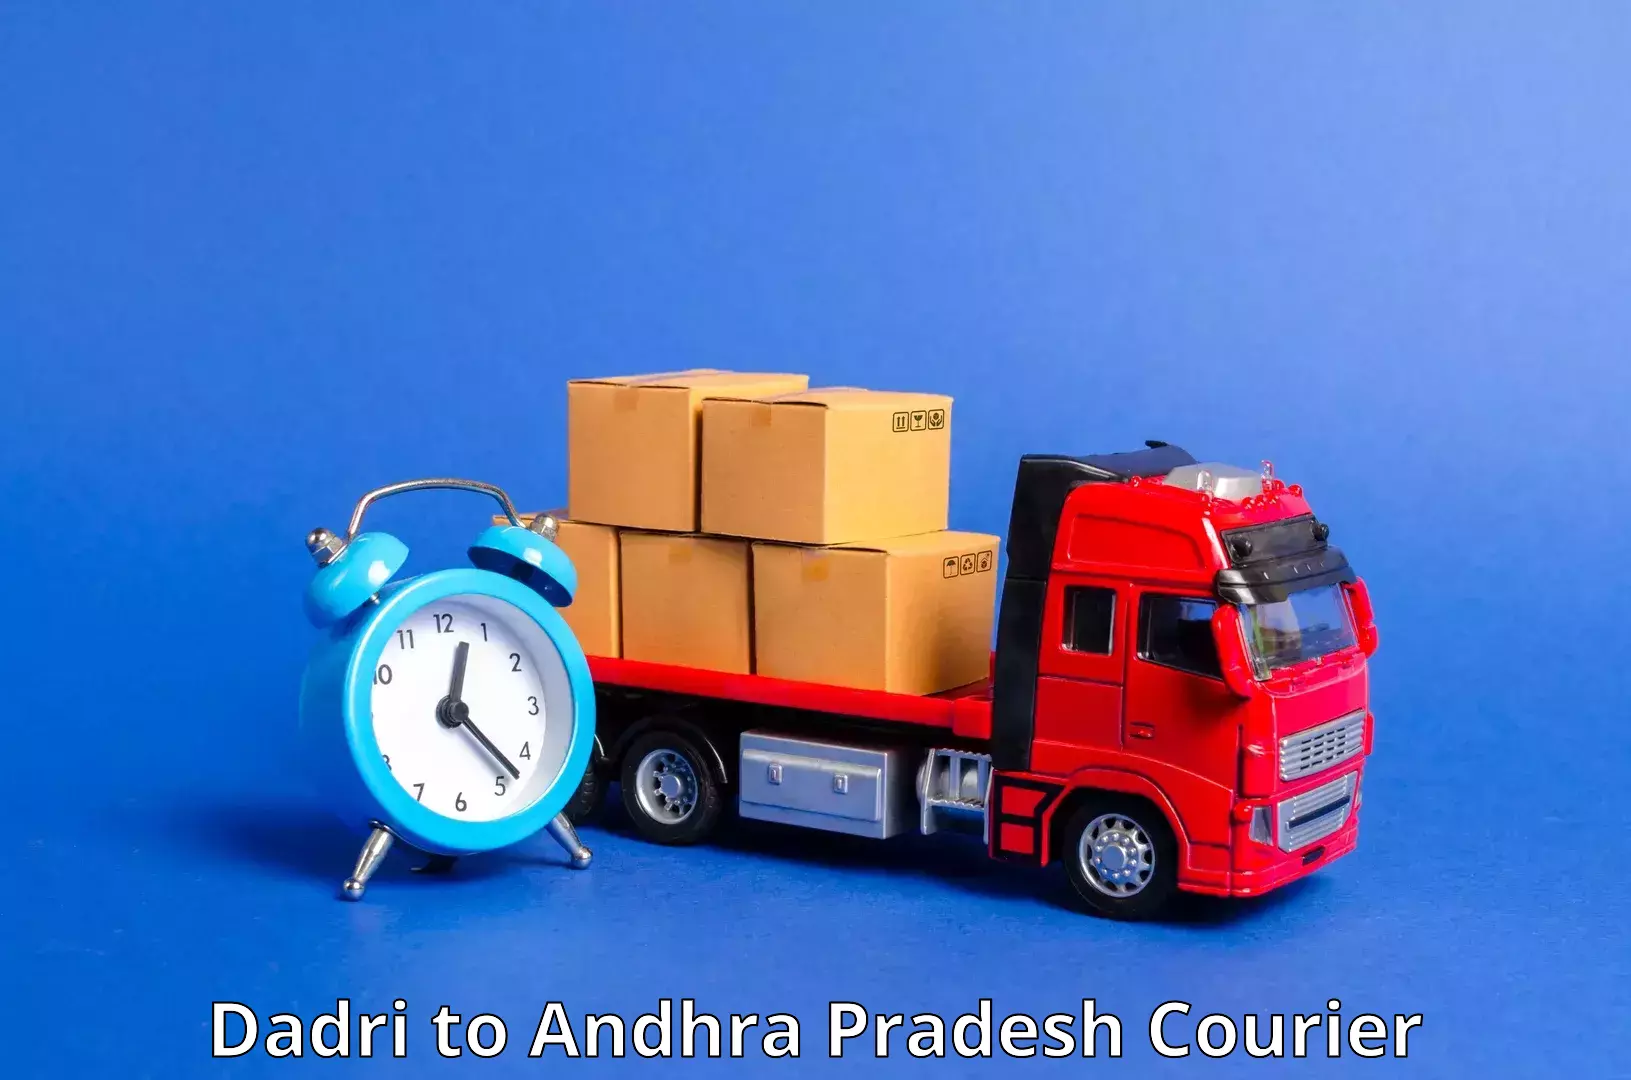 Affordable parcel service Dadri to Kudair